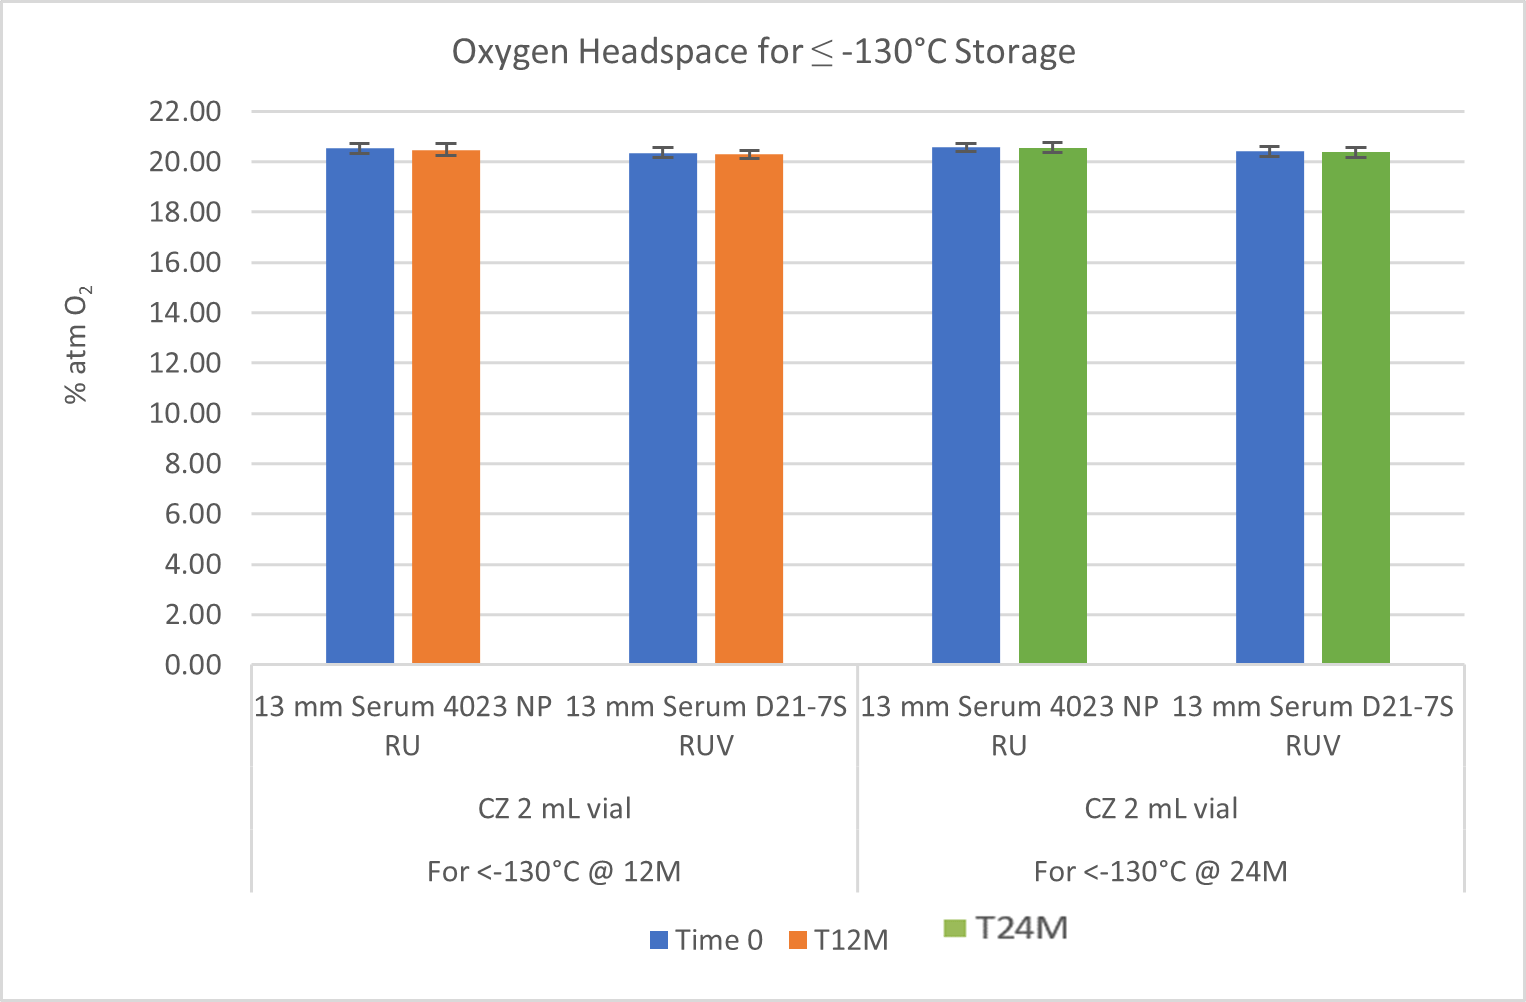  Oxygen Headspace at ≤ -130°C, Helium leak testing